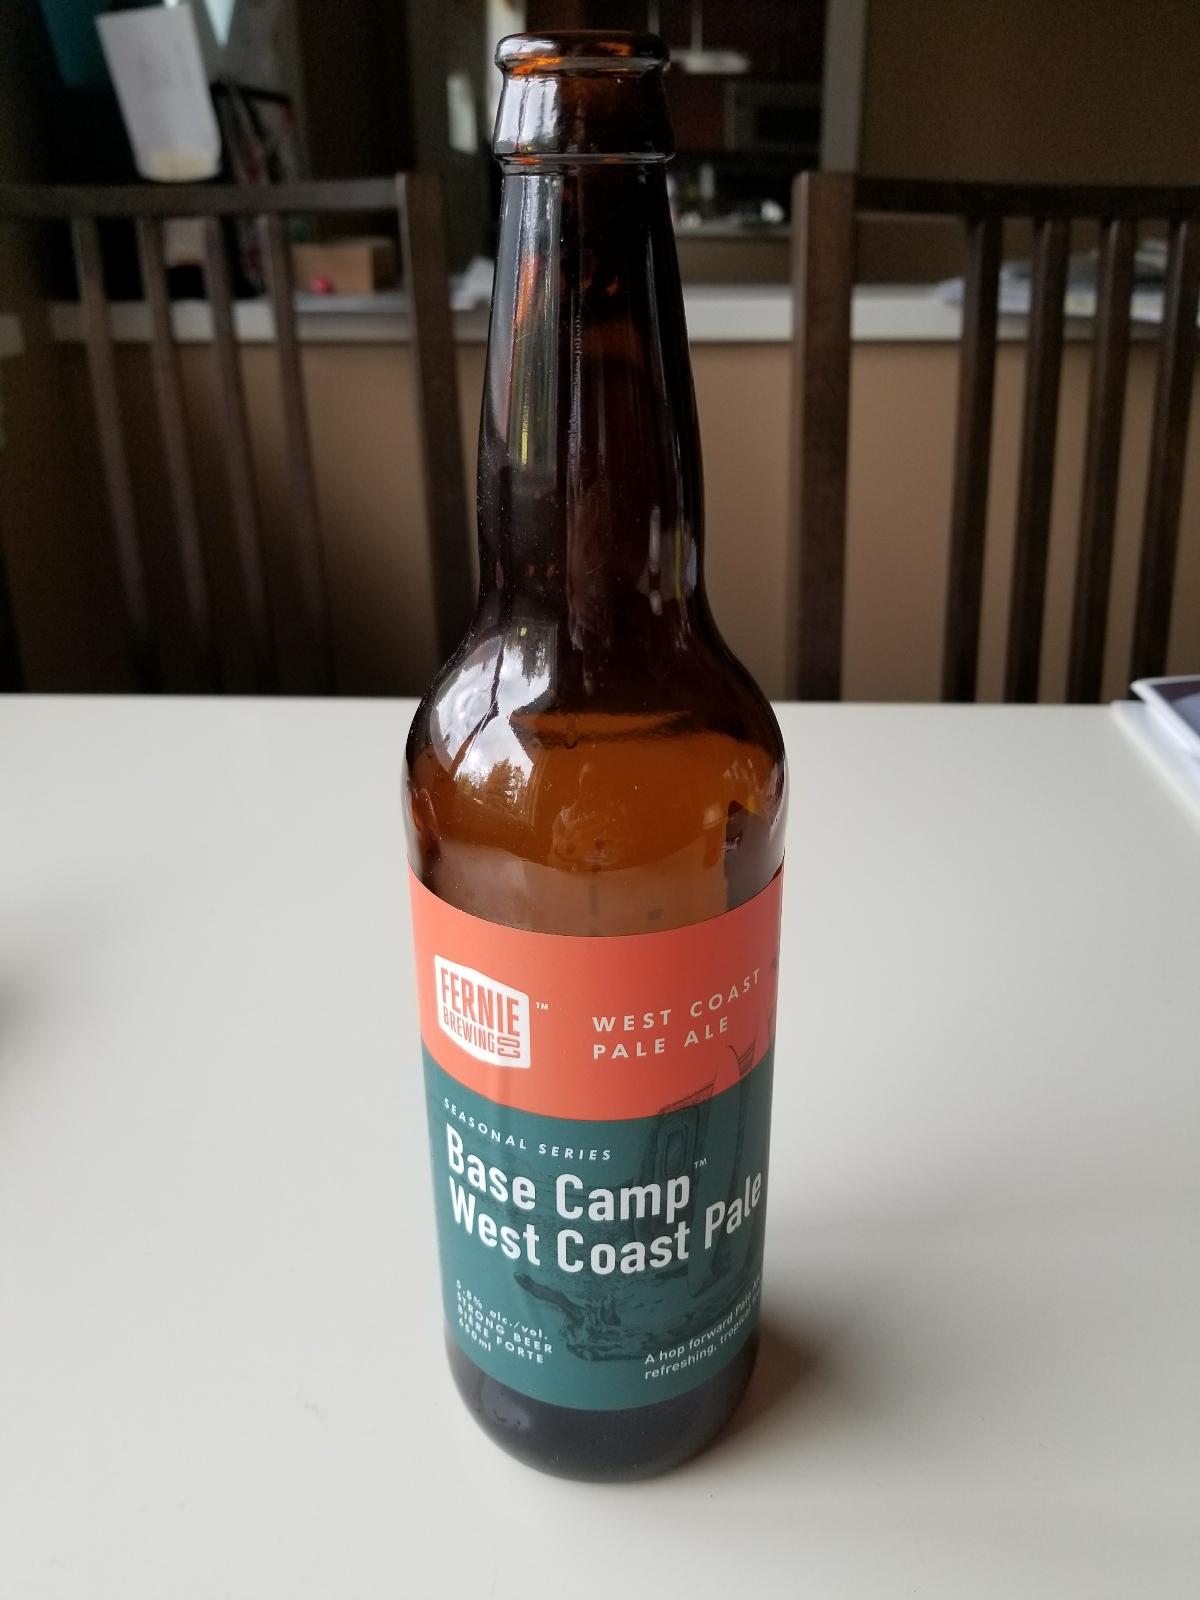 Base Camp West Coast Pale Ale